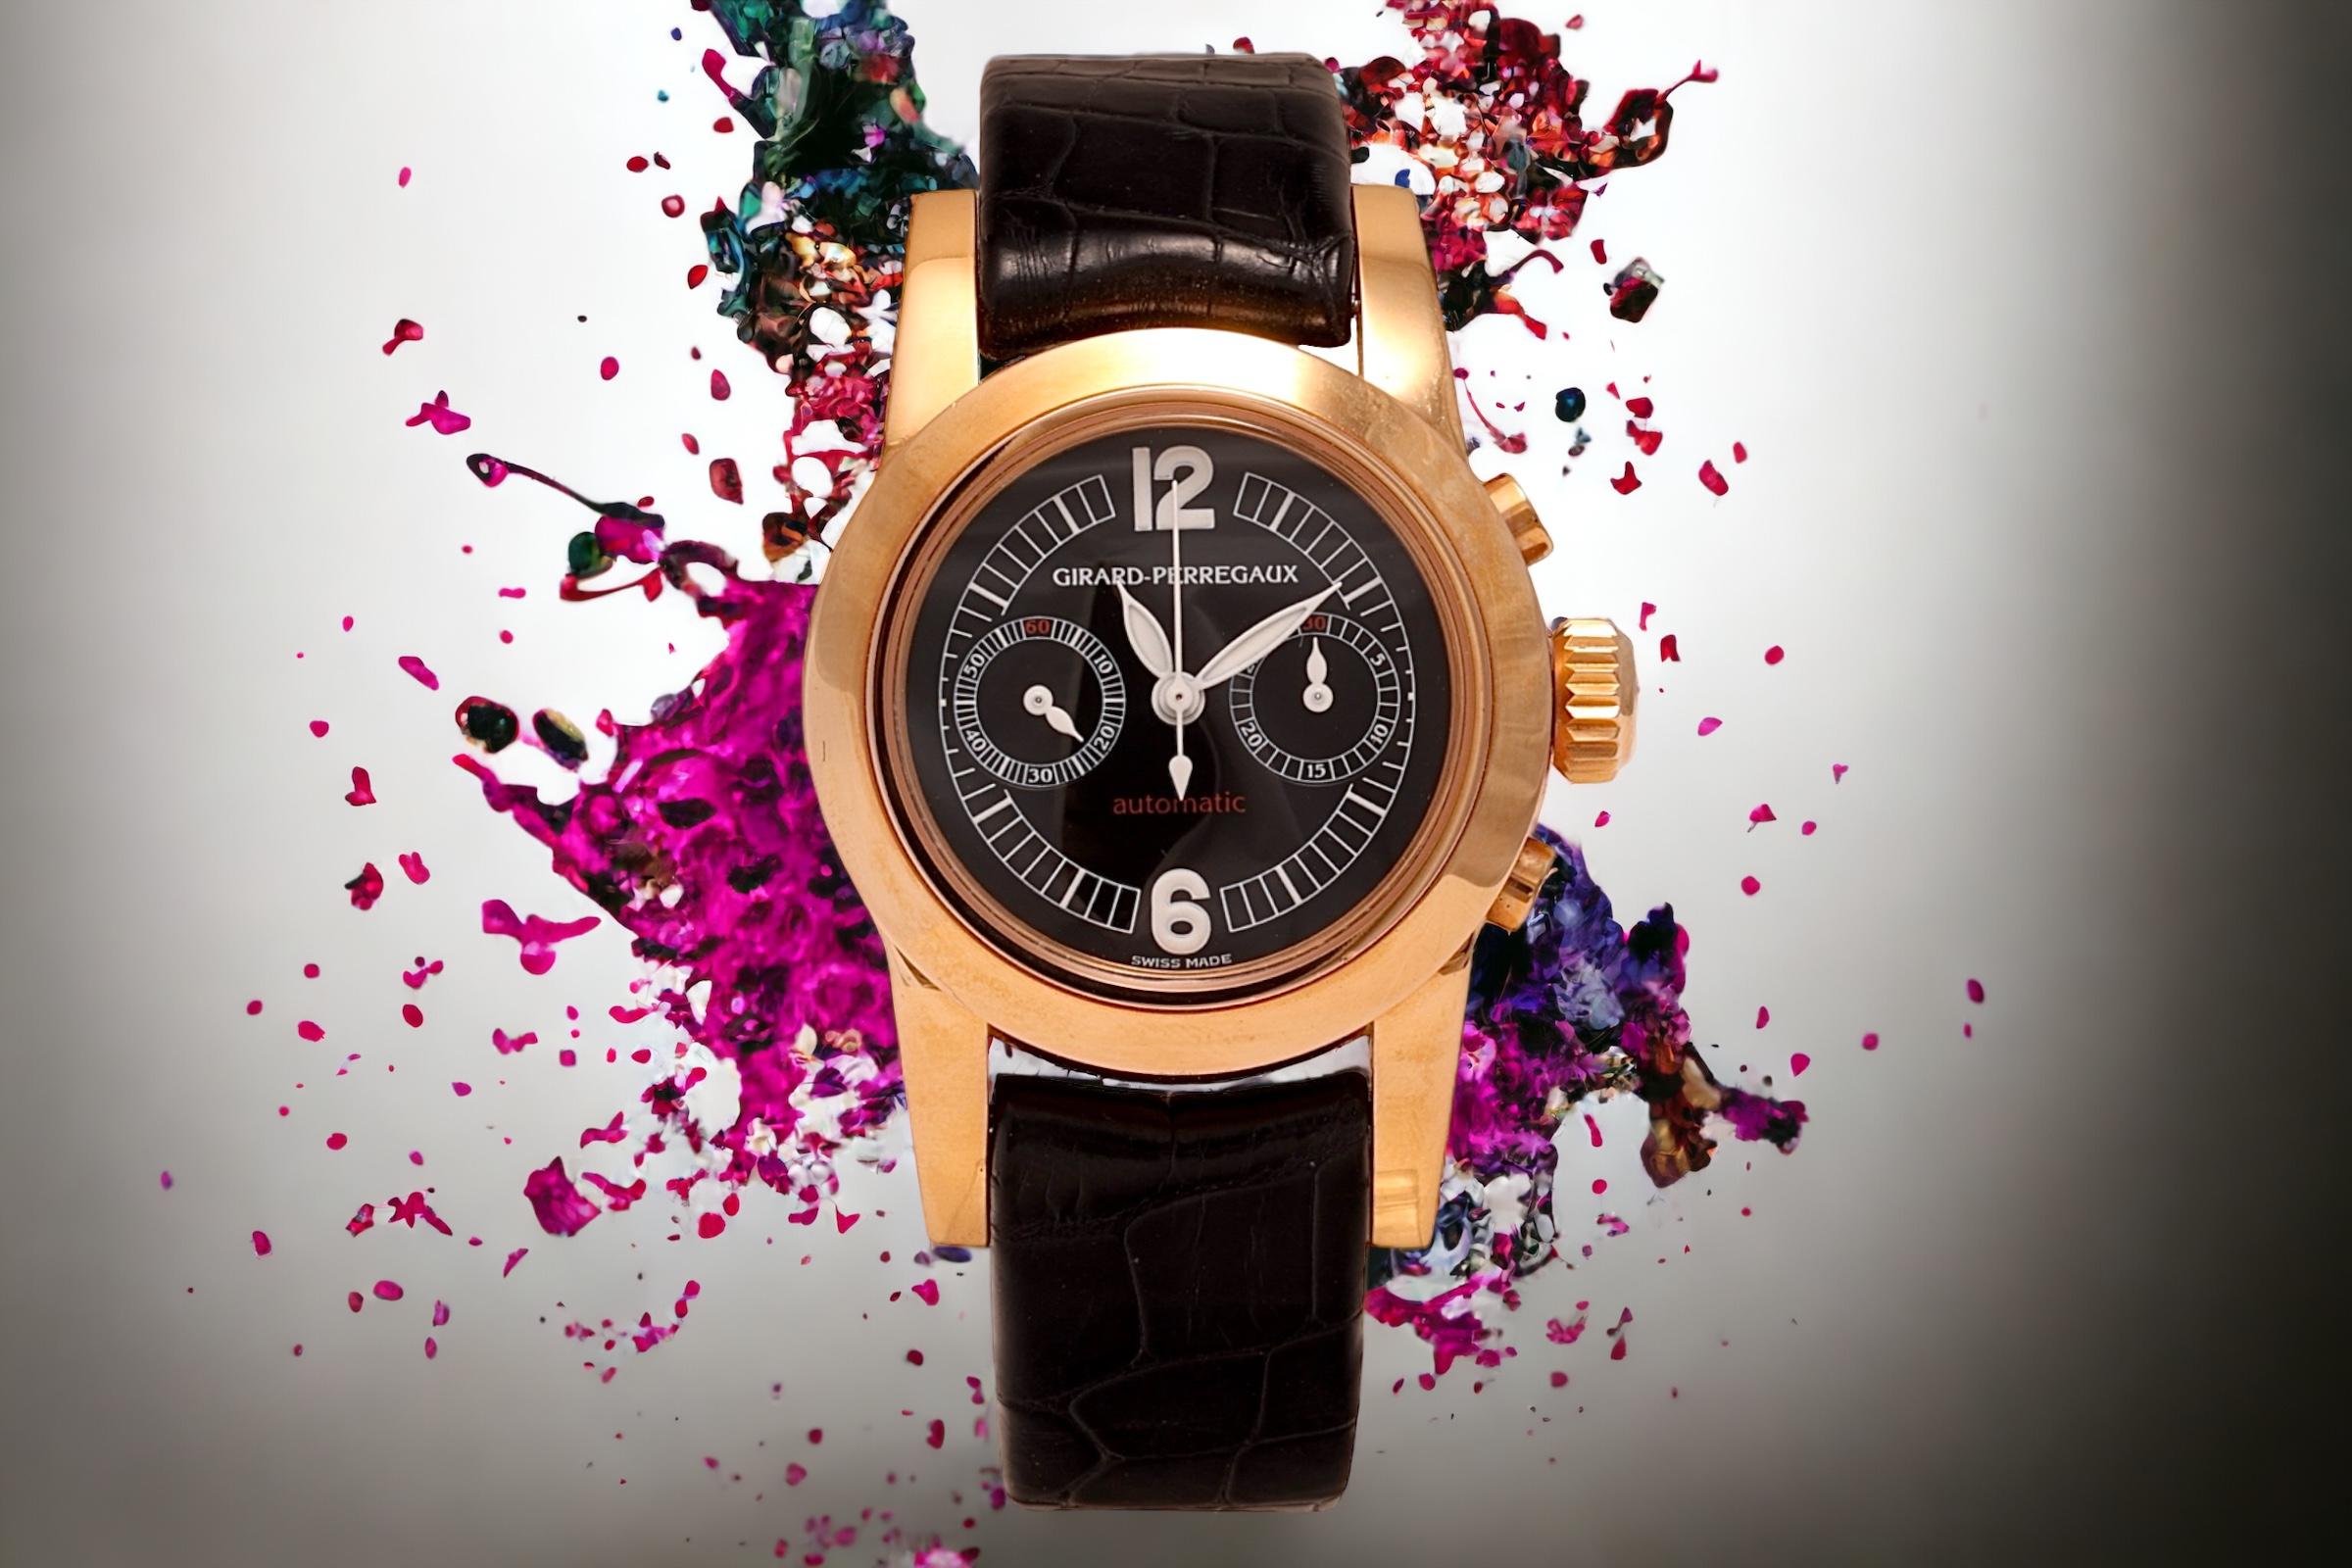 18 Kt Girard Perregaux Chronograph Wrist Watch For Sale 6